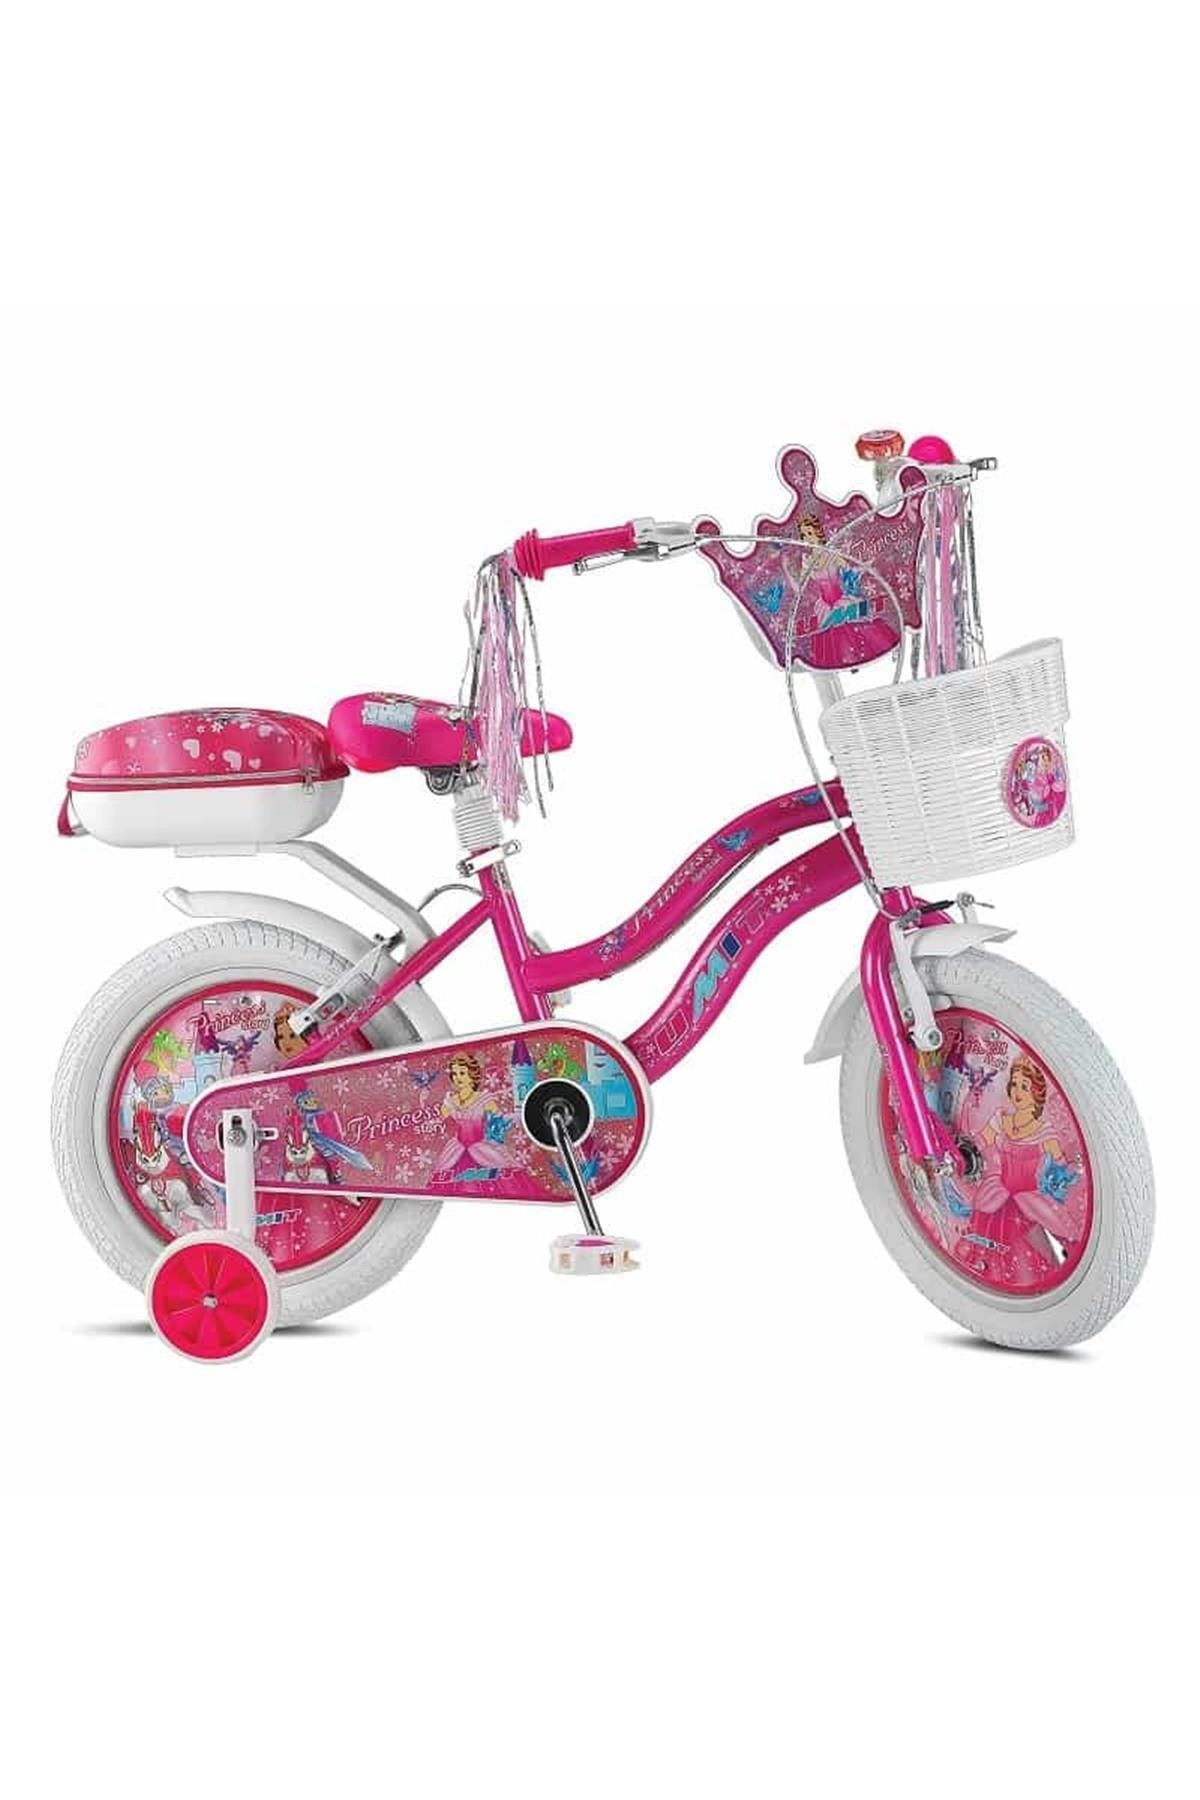 Ümit Bisiklet Ümit Princess 1608 16" Jant Kız Çocuk Bisikleti Pembe -100029.